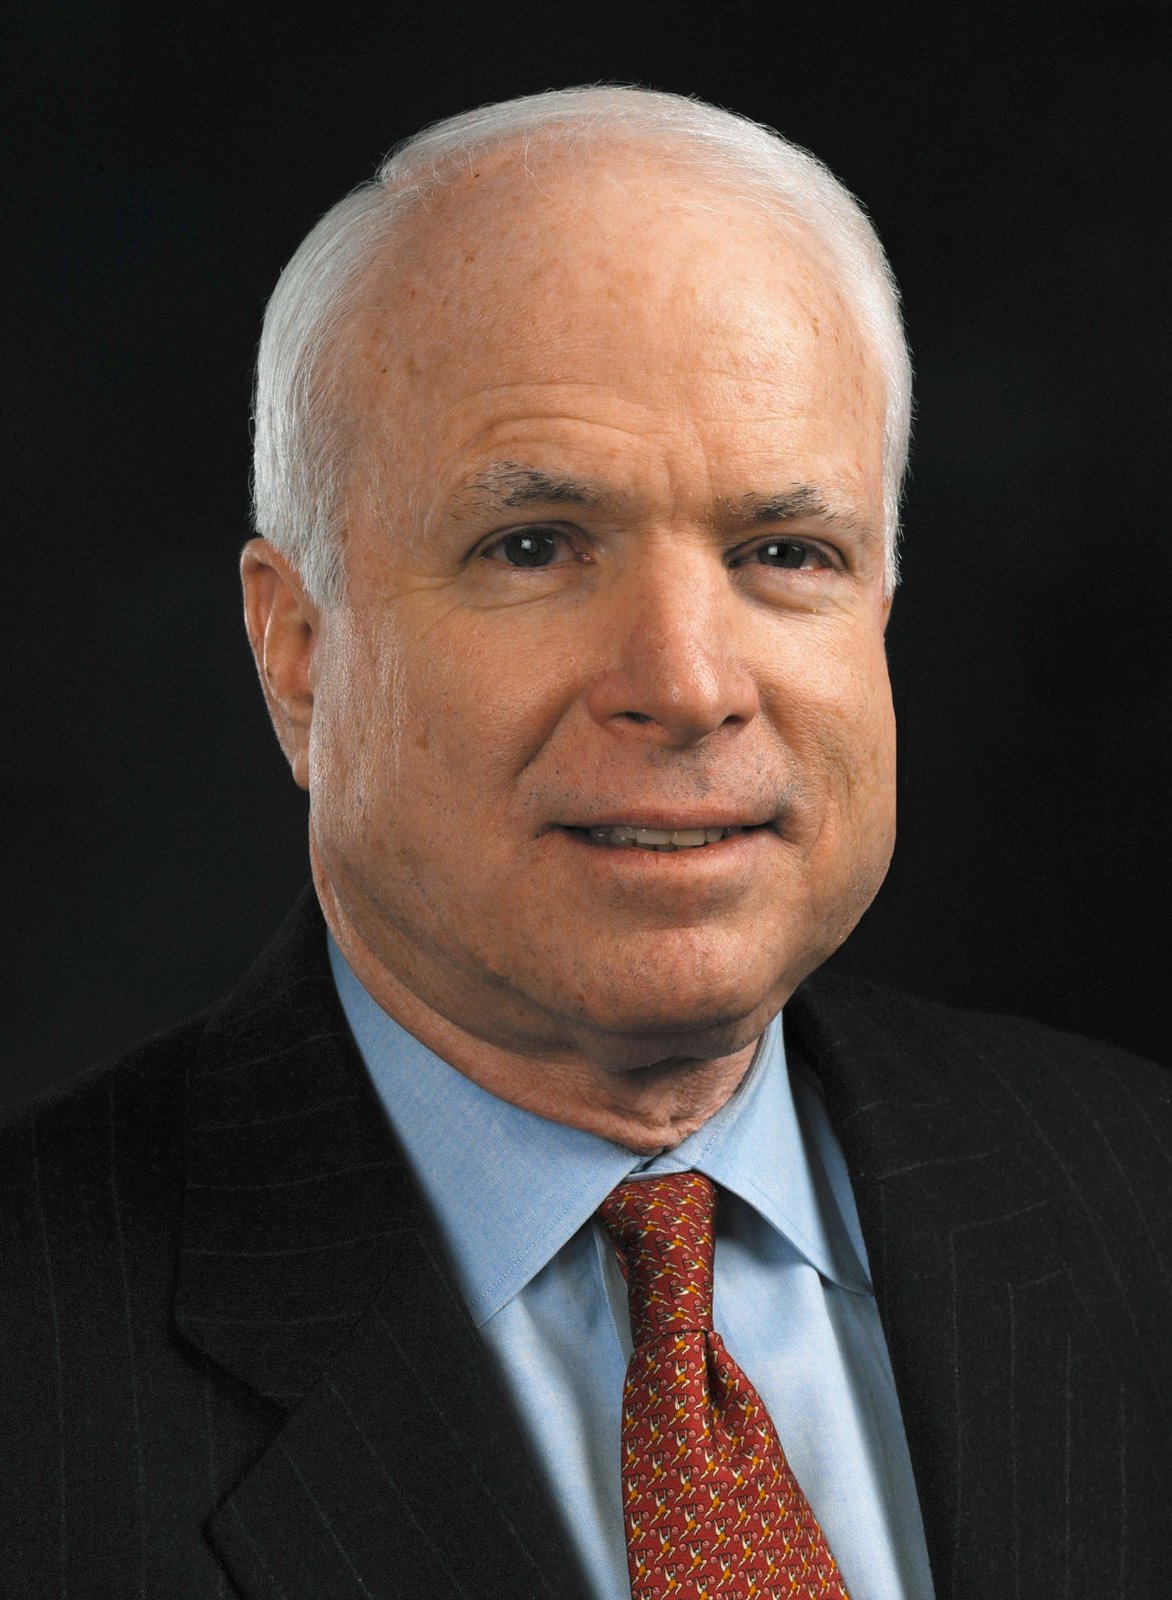 [John_McCain_official_photo_portrait-cropped.jpg]